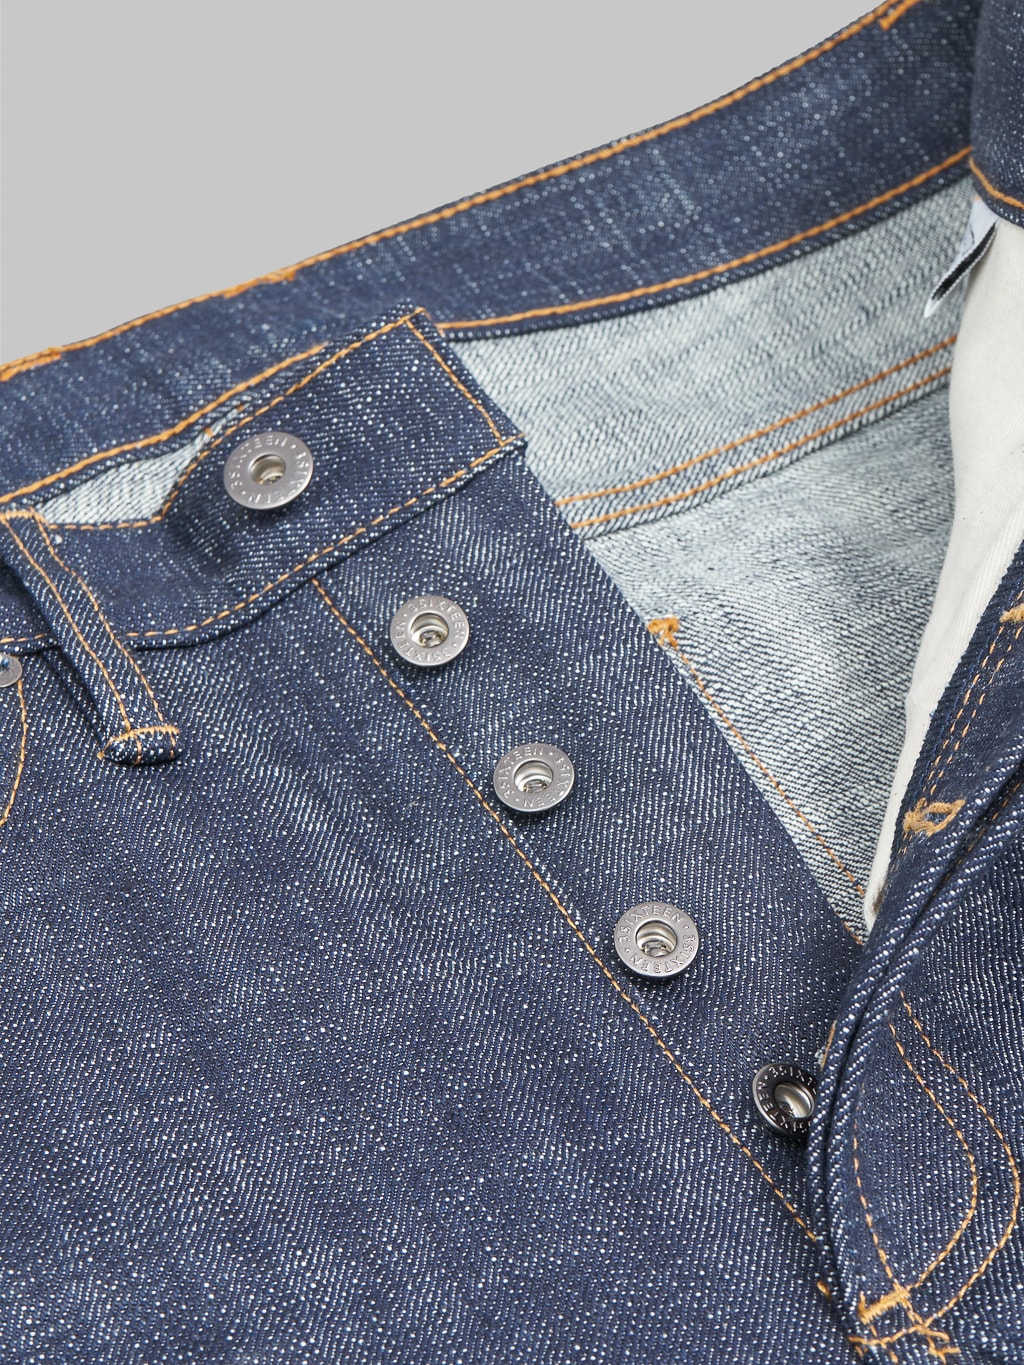 3sixteen CT 102xn 20th Anniversary Natural Indigo Jeans buttons